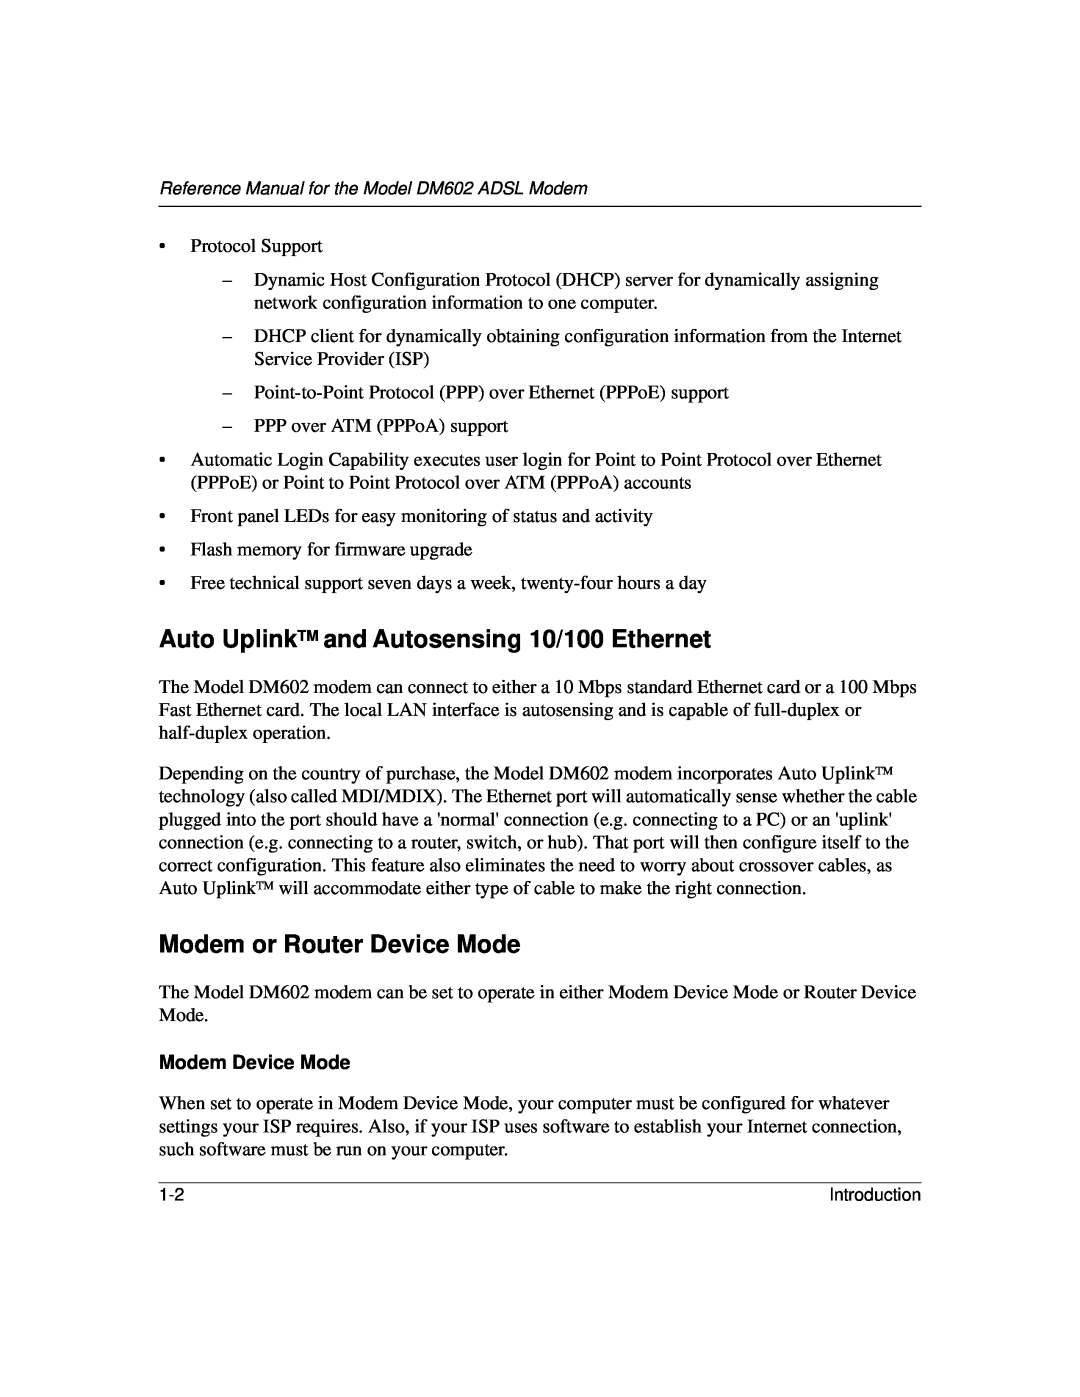 NETGEAR DM602 manual Auto UplinkTM and Autosensing 10/100 Ethernet, Modem or Router Device Mode, Modem Device Mode 